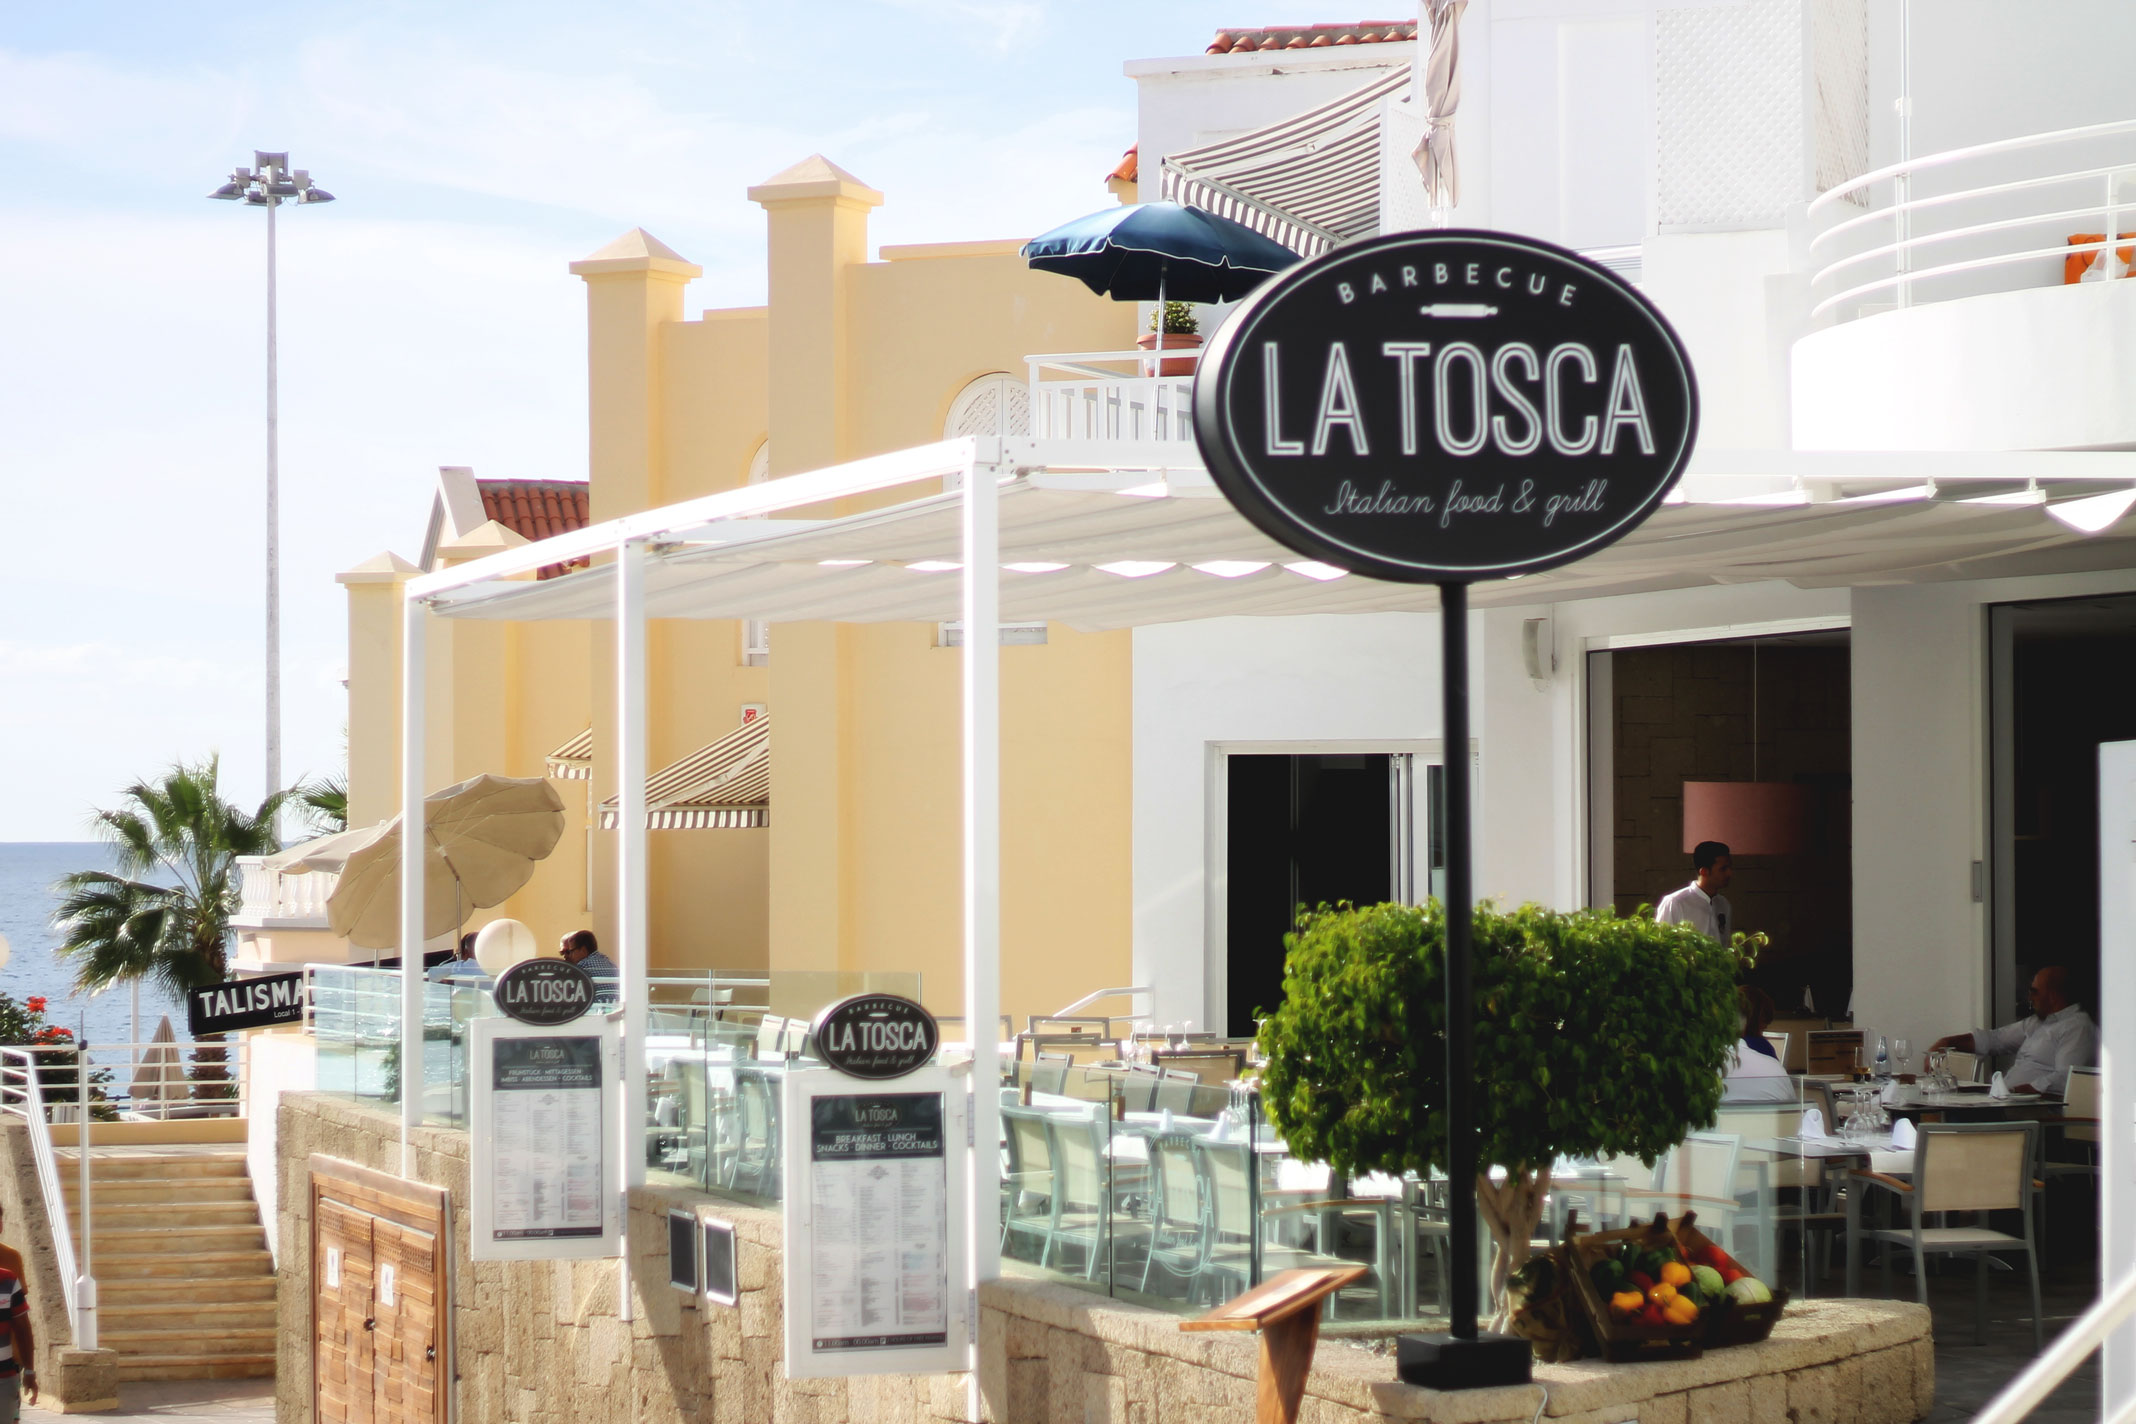 Restaurant La Tosca, Playa de Fanabe - Costa Adeje - Tenerife - Styleat30 Travel Blog 01